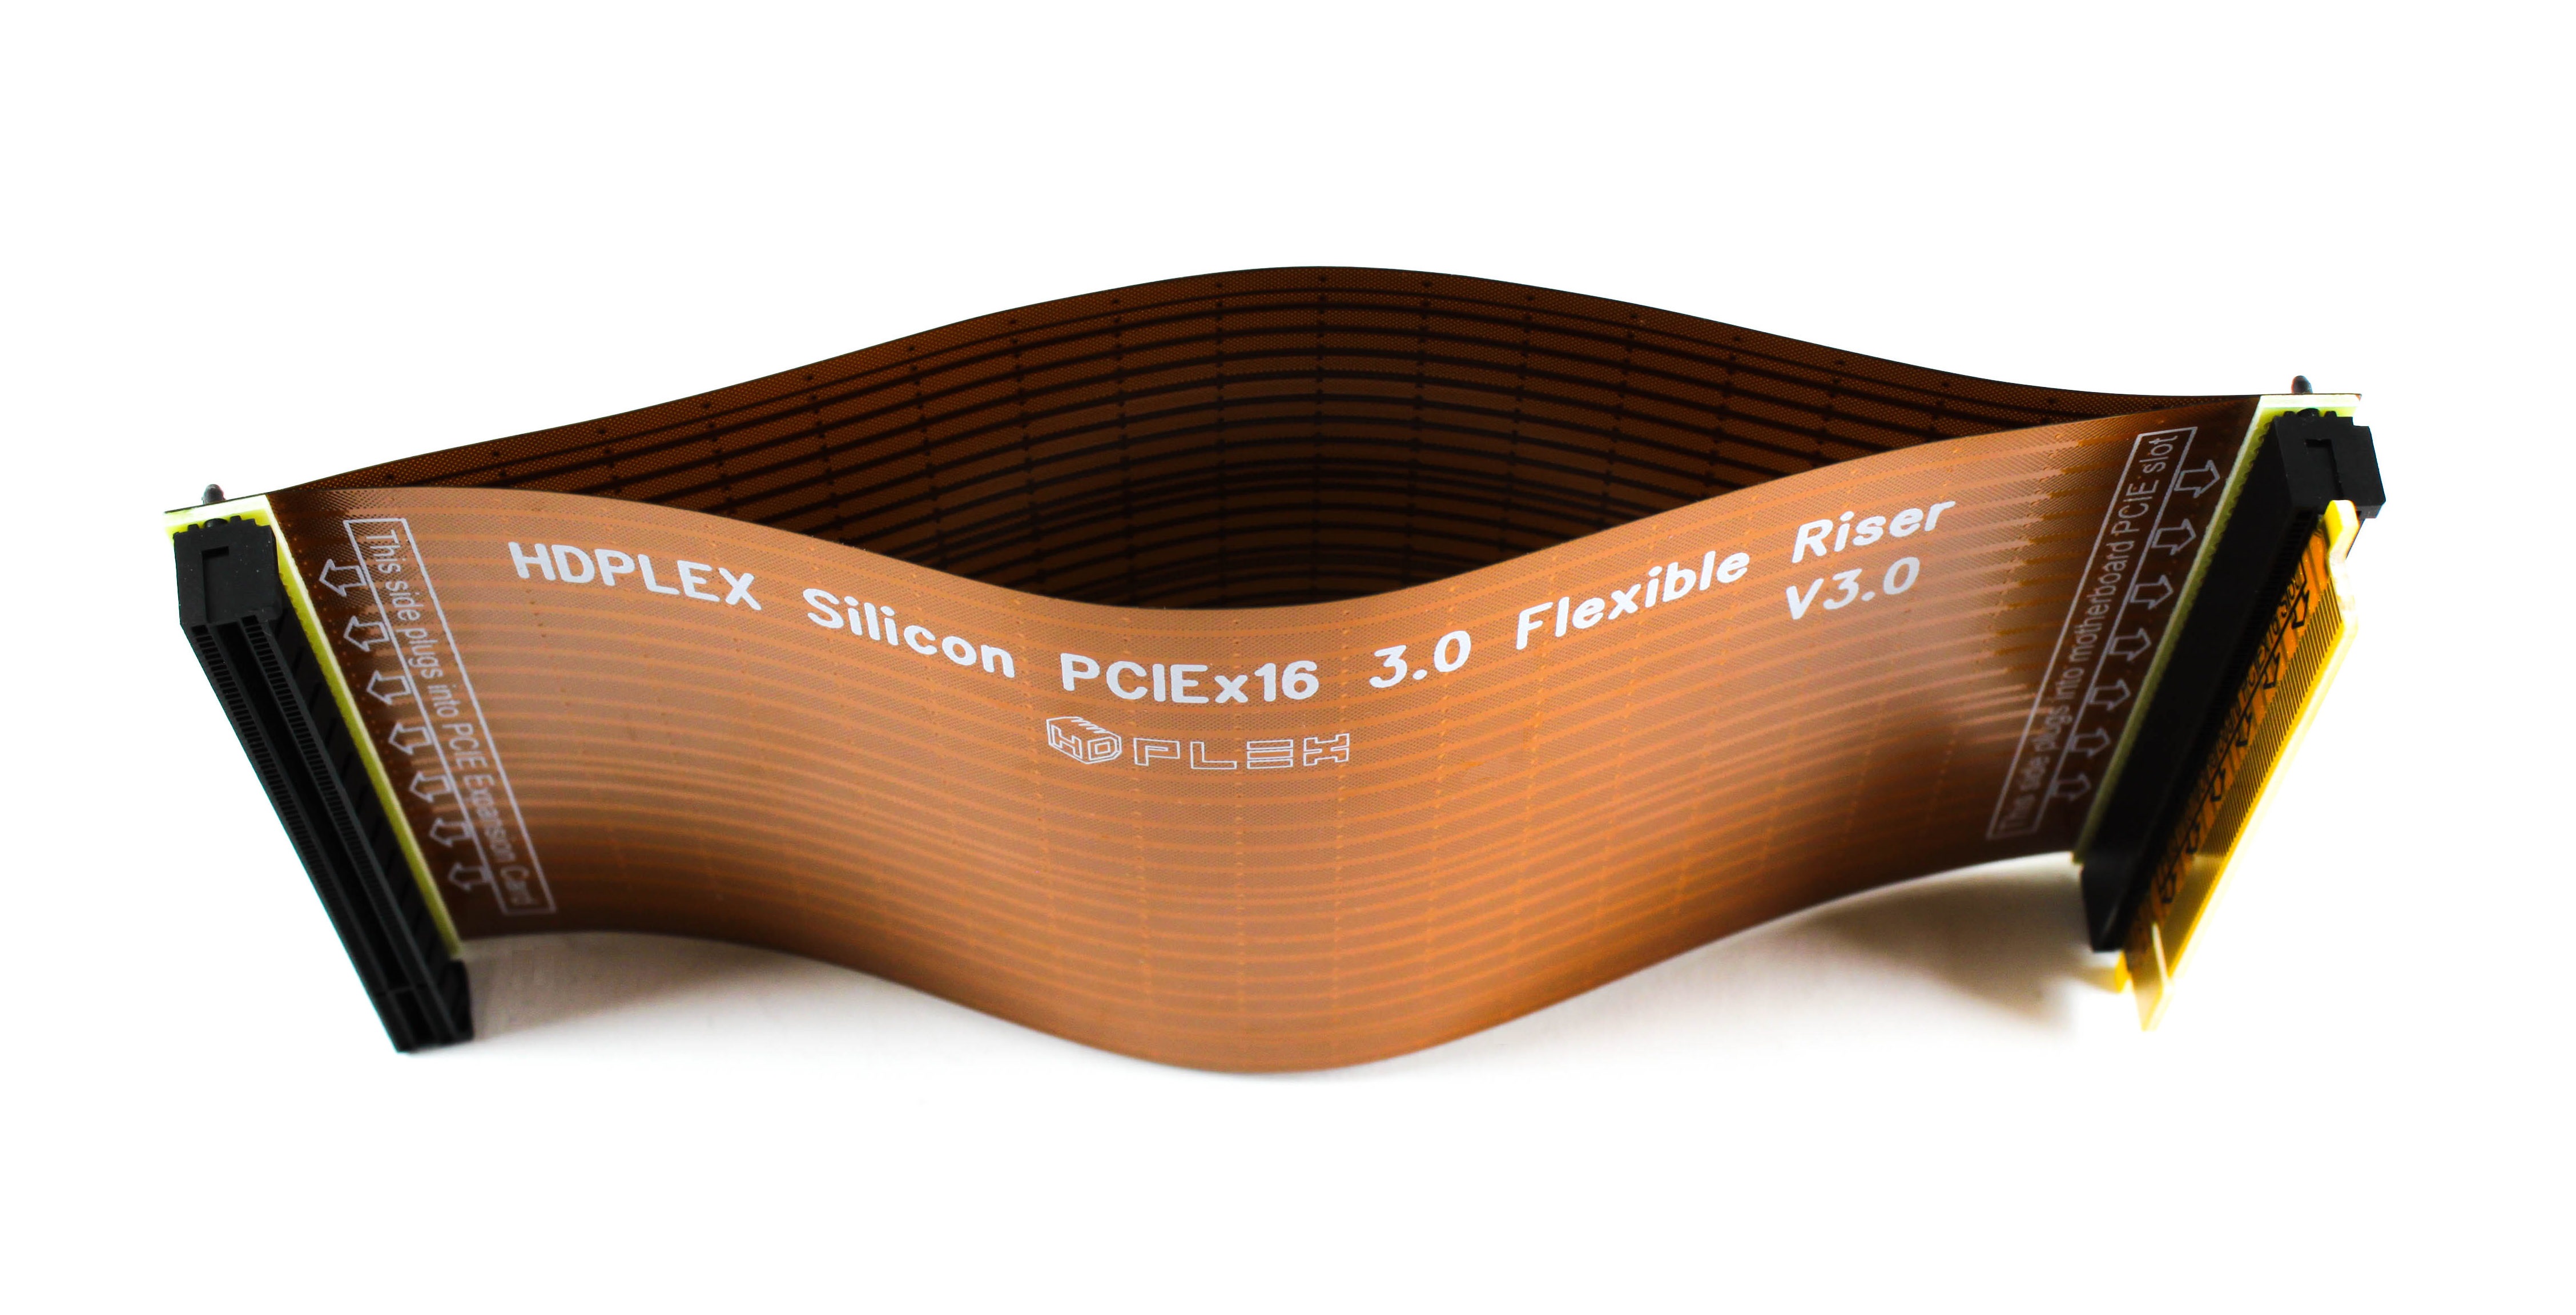 HDPLEX Silicon PCIEx16 PCIE 3.0 Flexible Riser